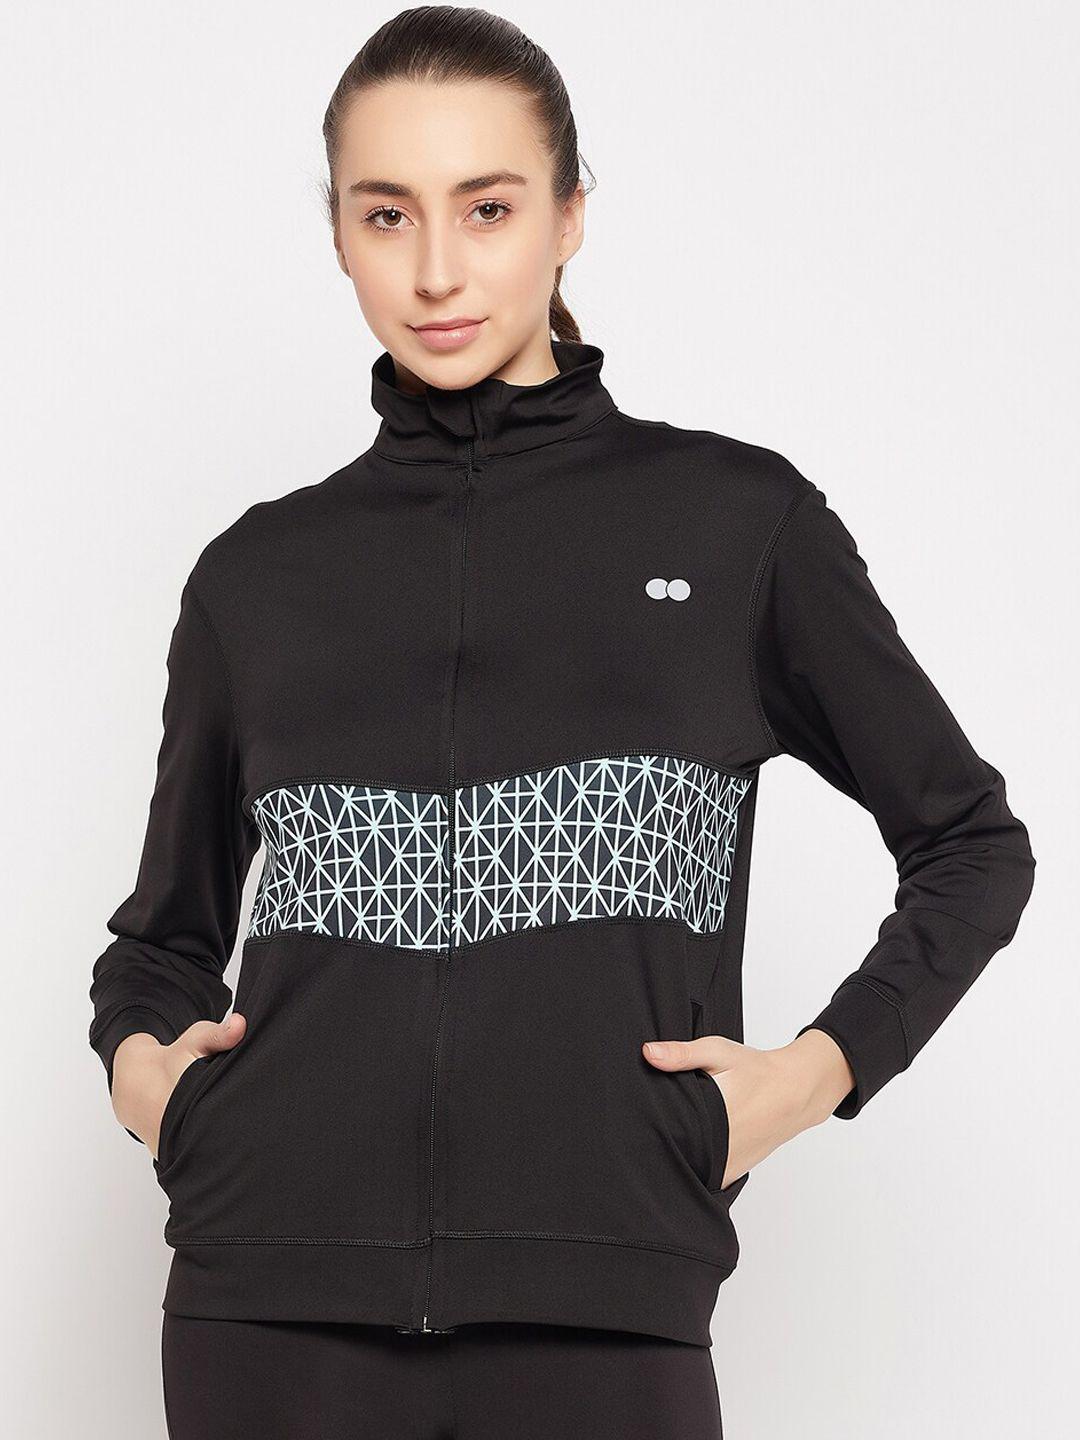 clovia geometric printed lightweight training or gym sporty jacket with patchwork